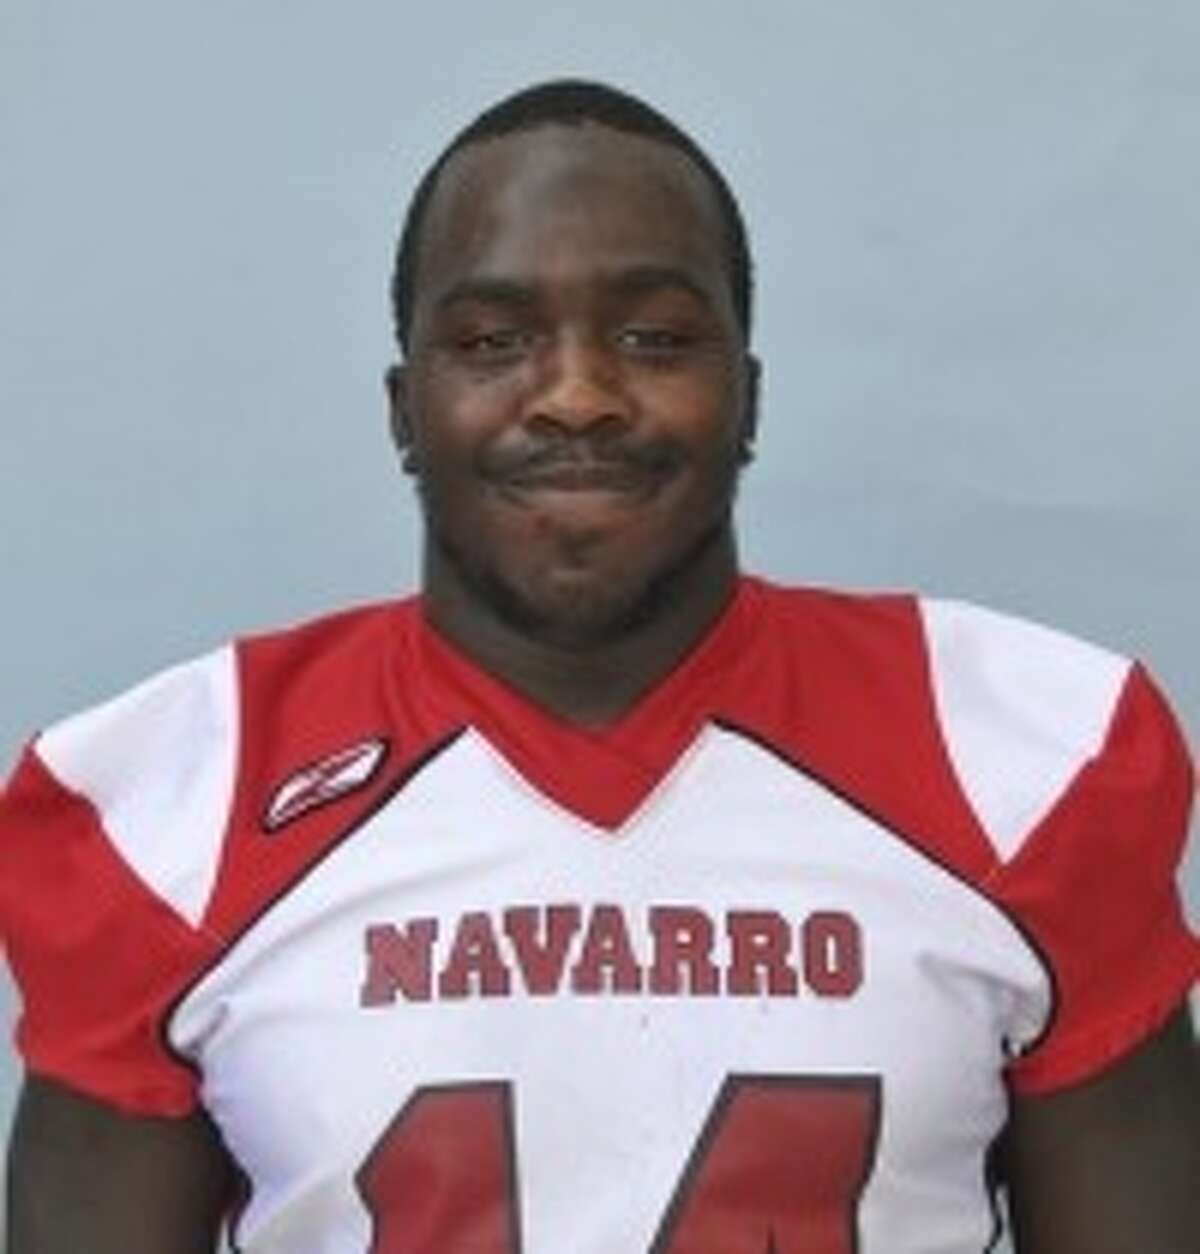 DePauldrick Garrett, Navarro College football